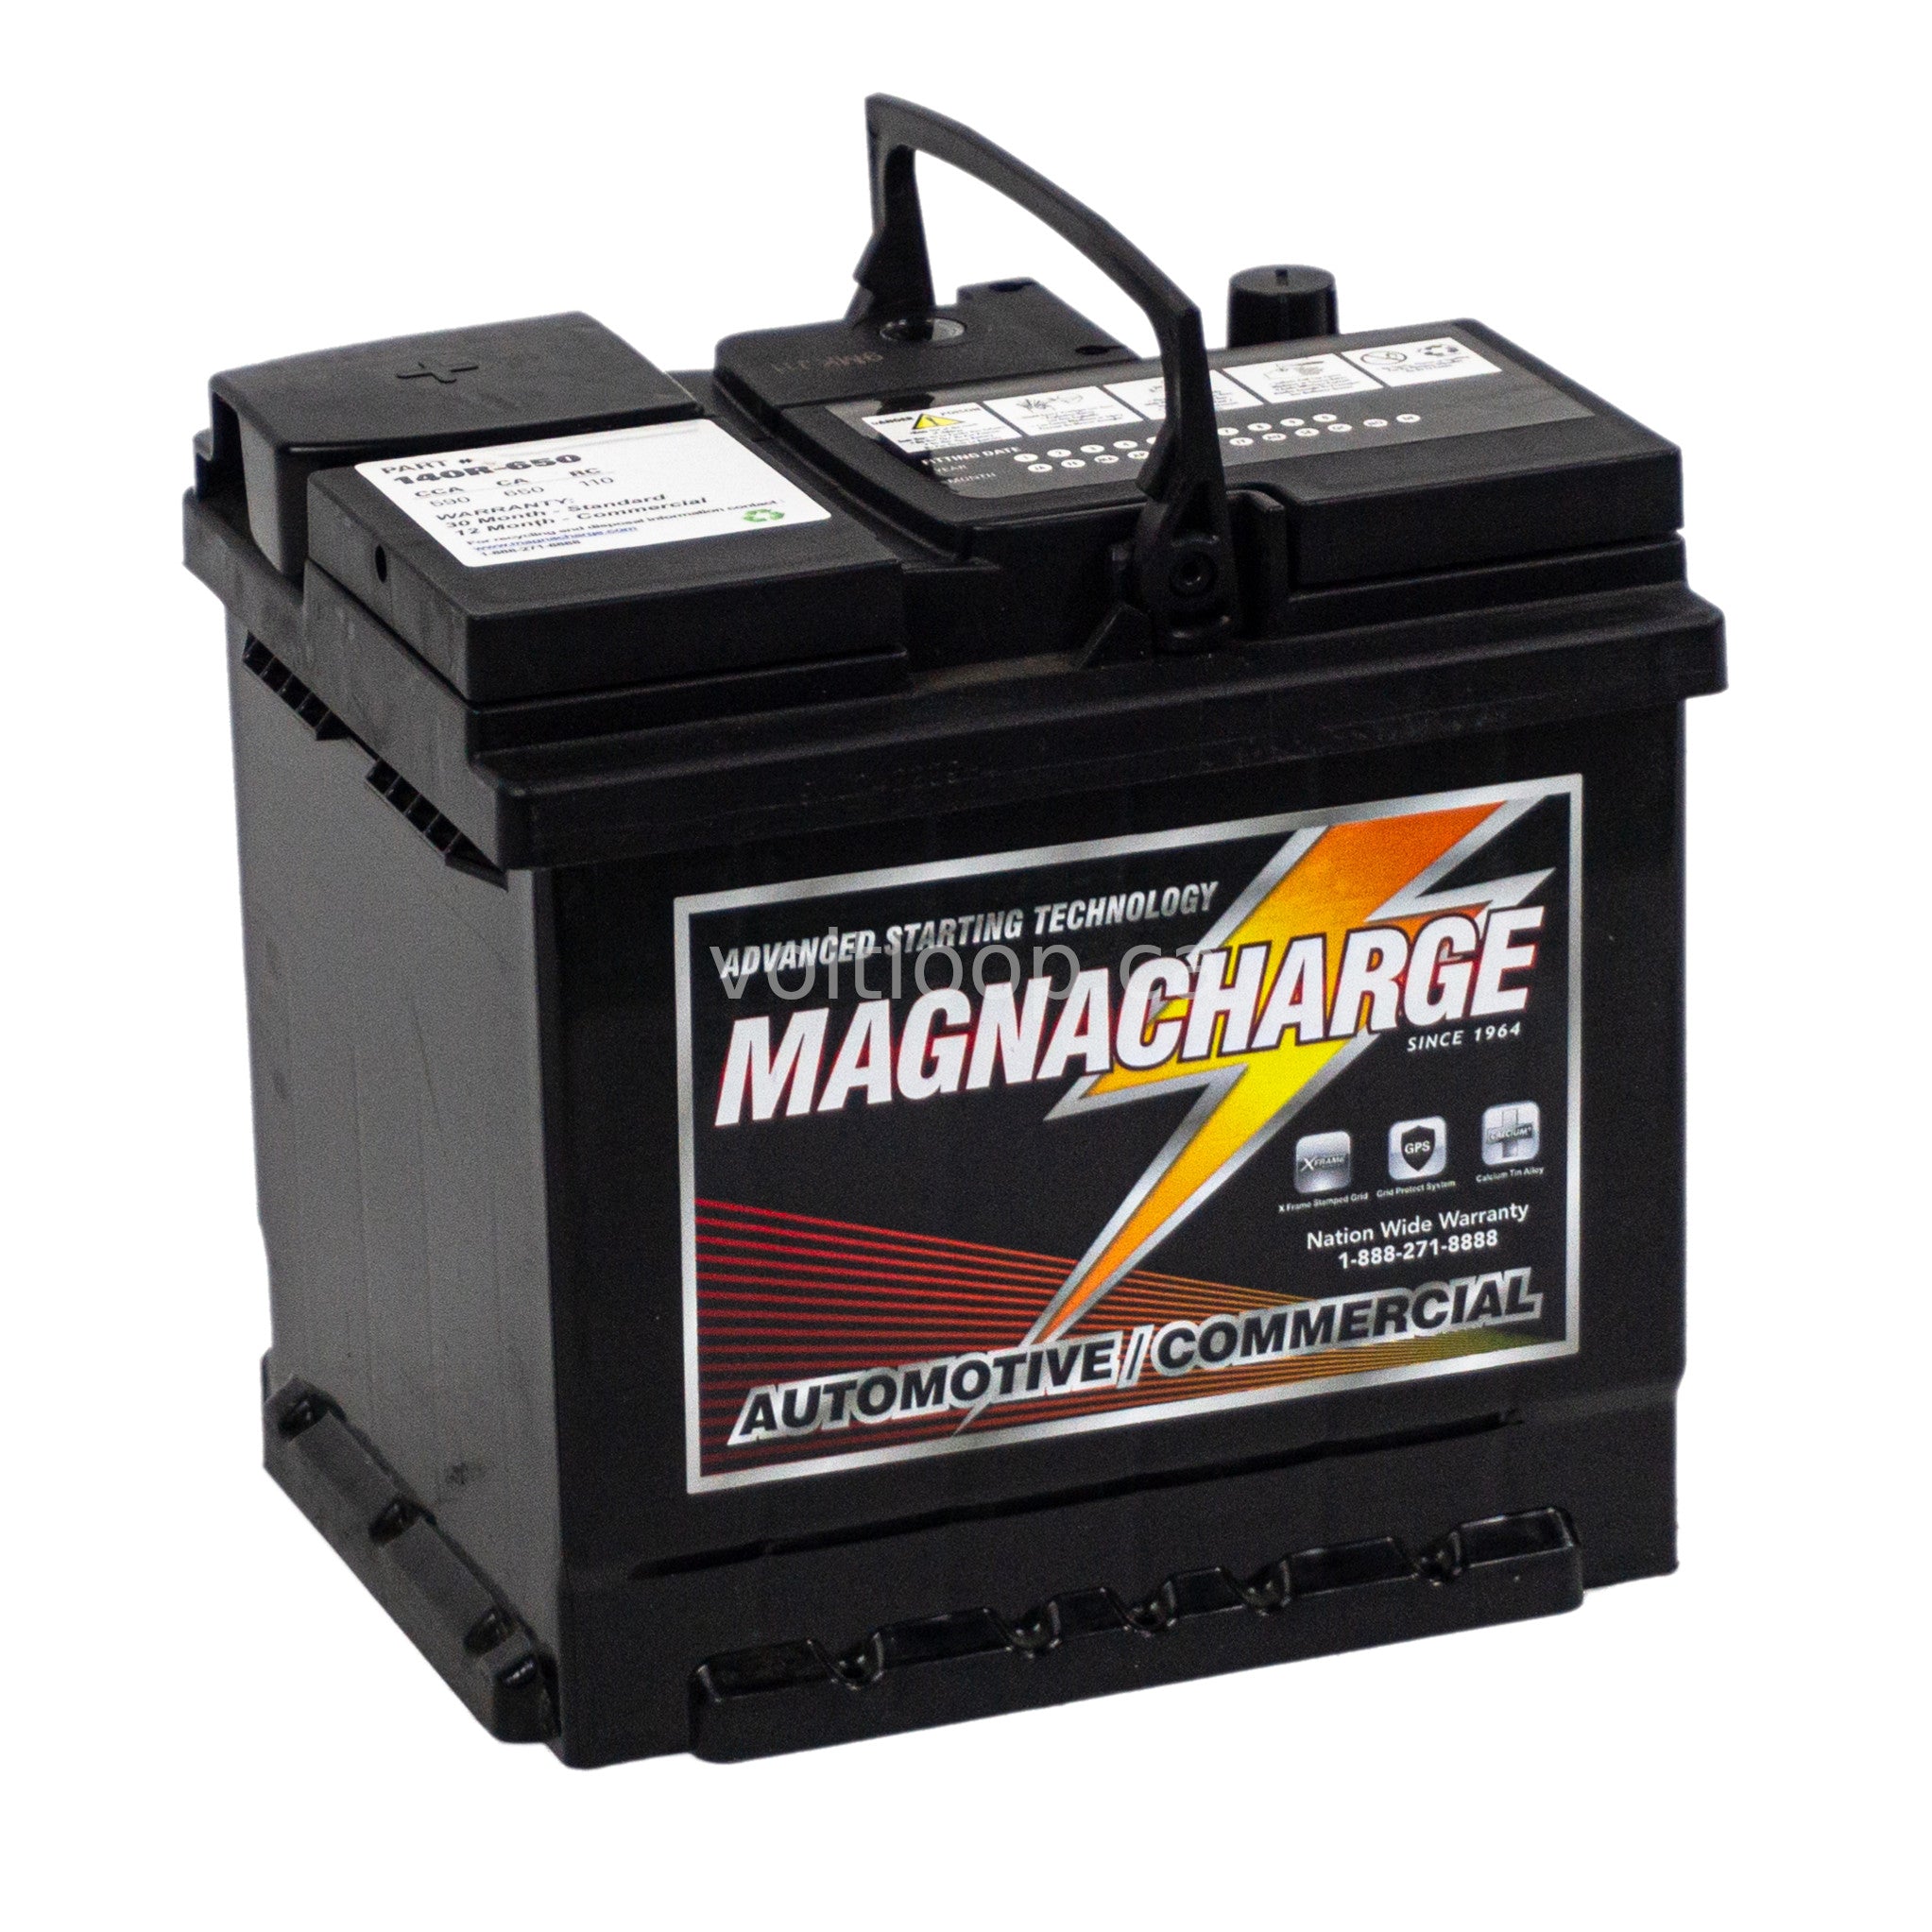 Magnacharge 140R-650 Group 140R Car Battery